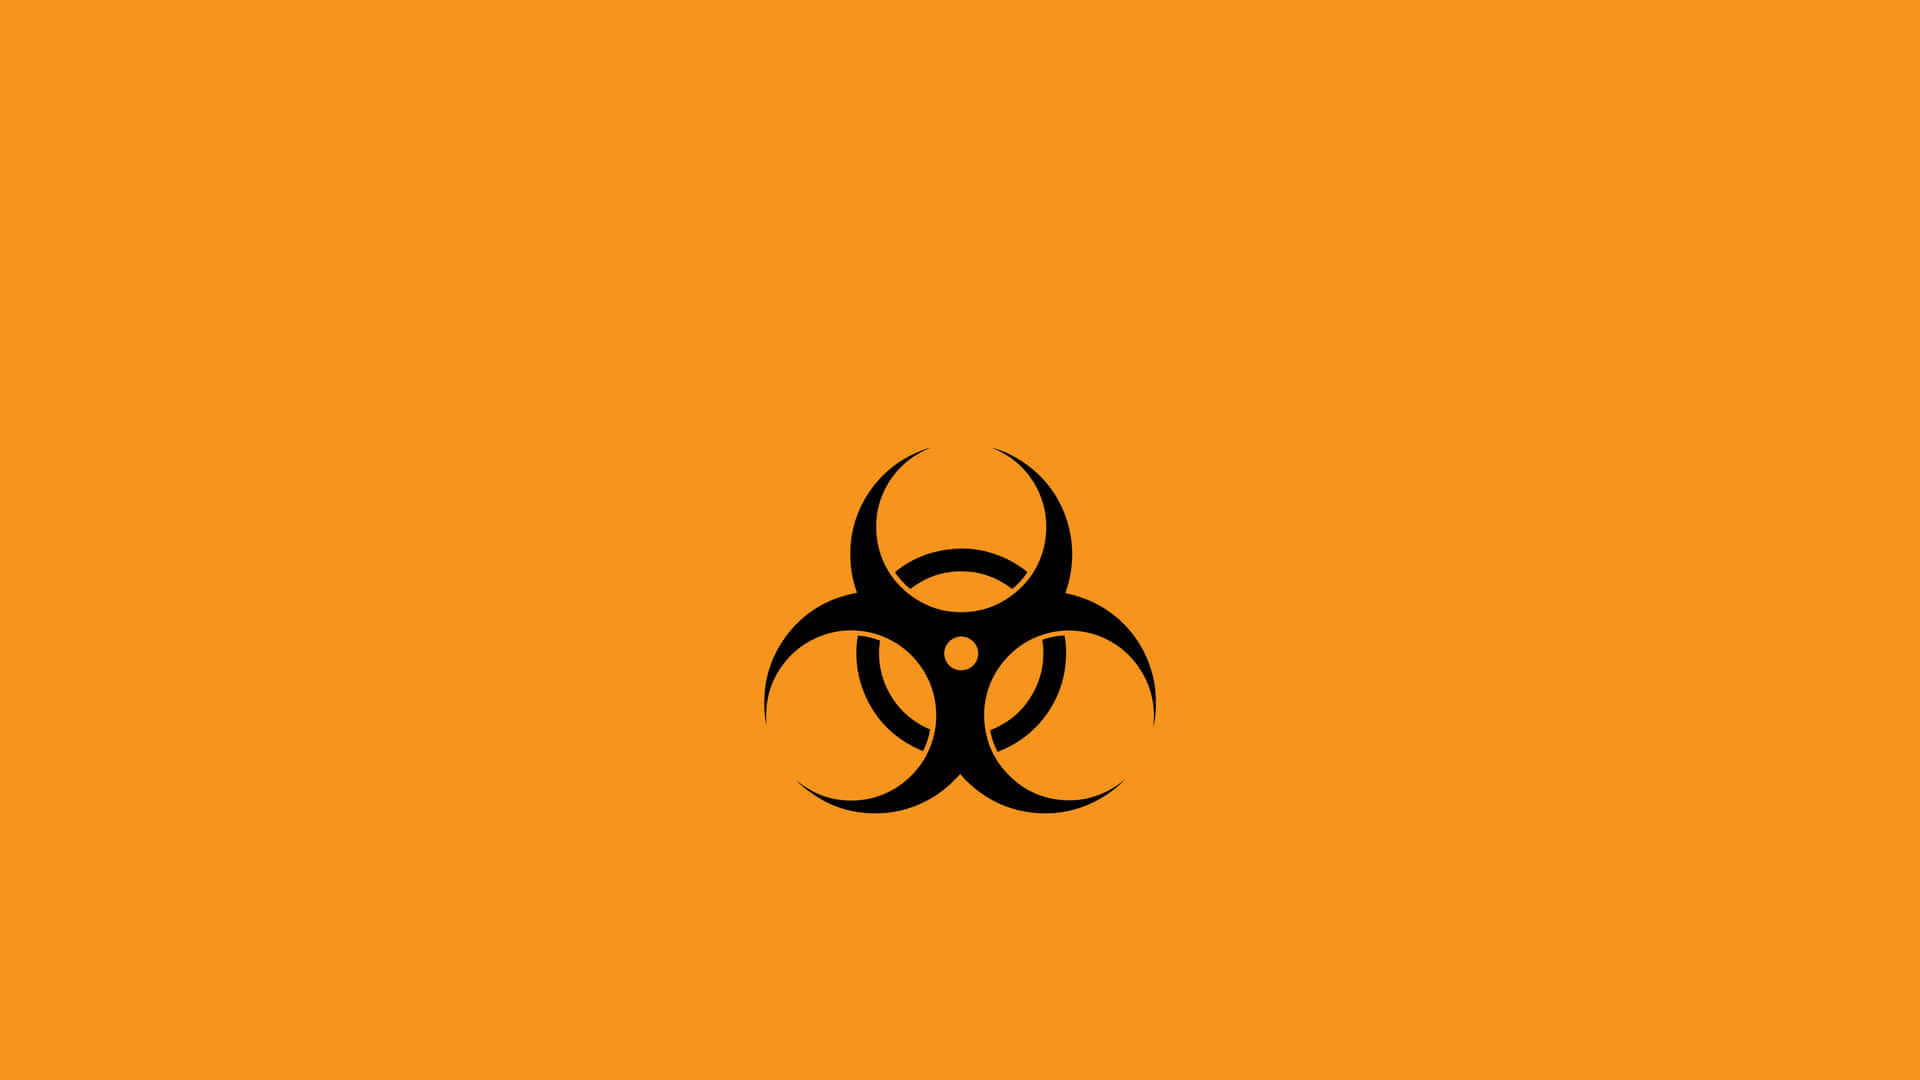 Toxic Biohazard Symbol Background